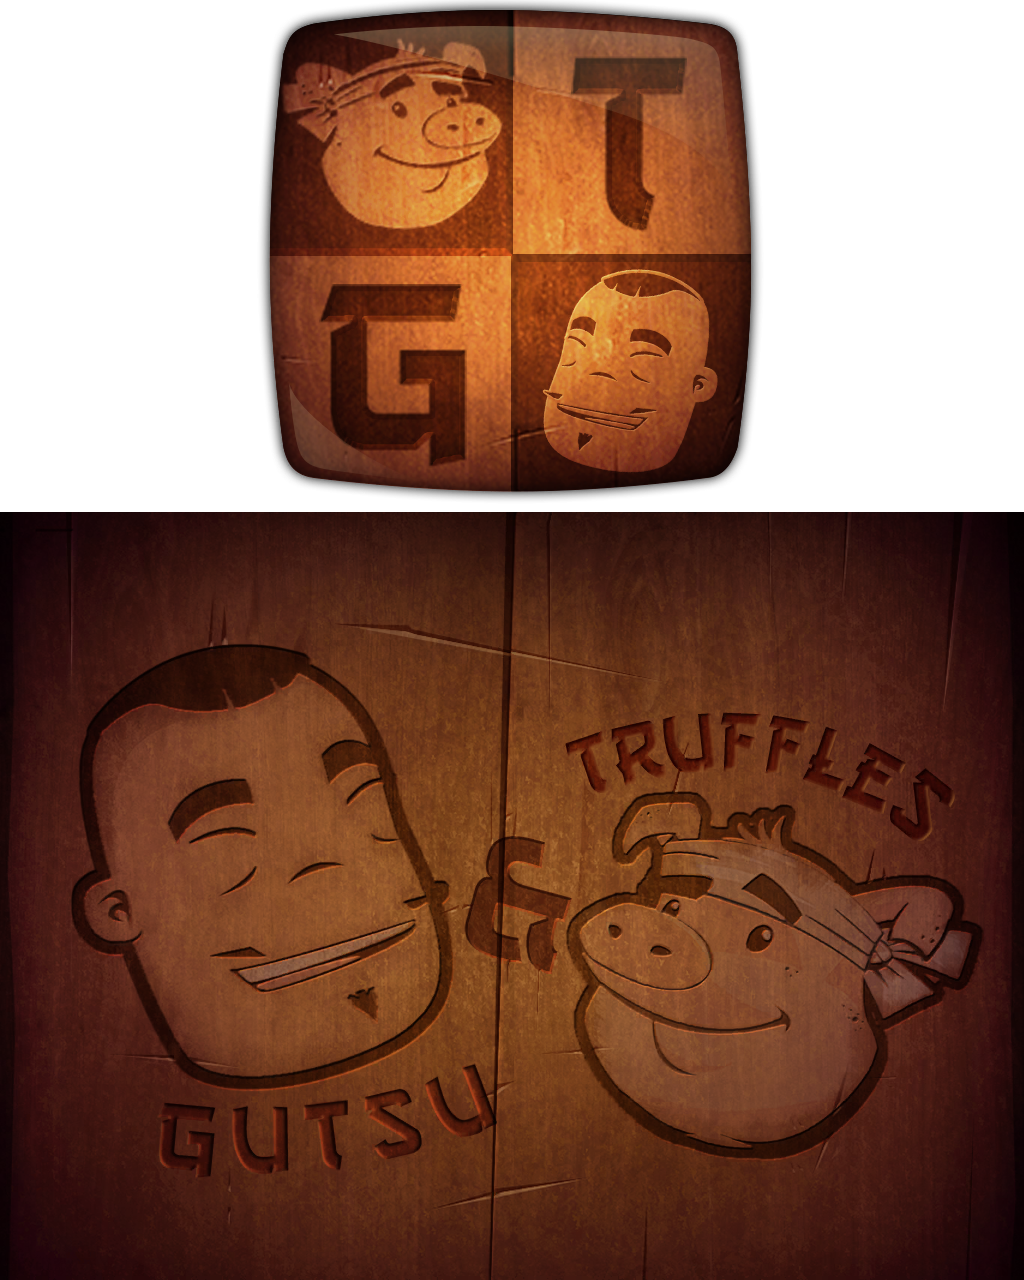 Gutsu and Truffles